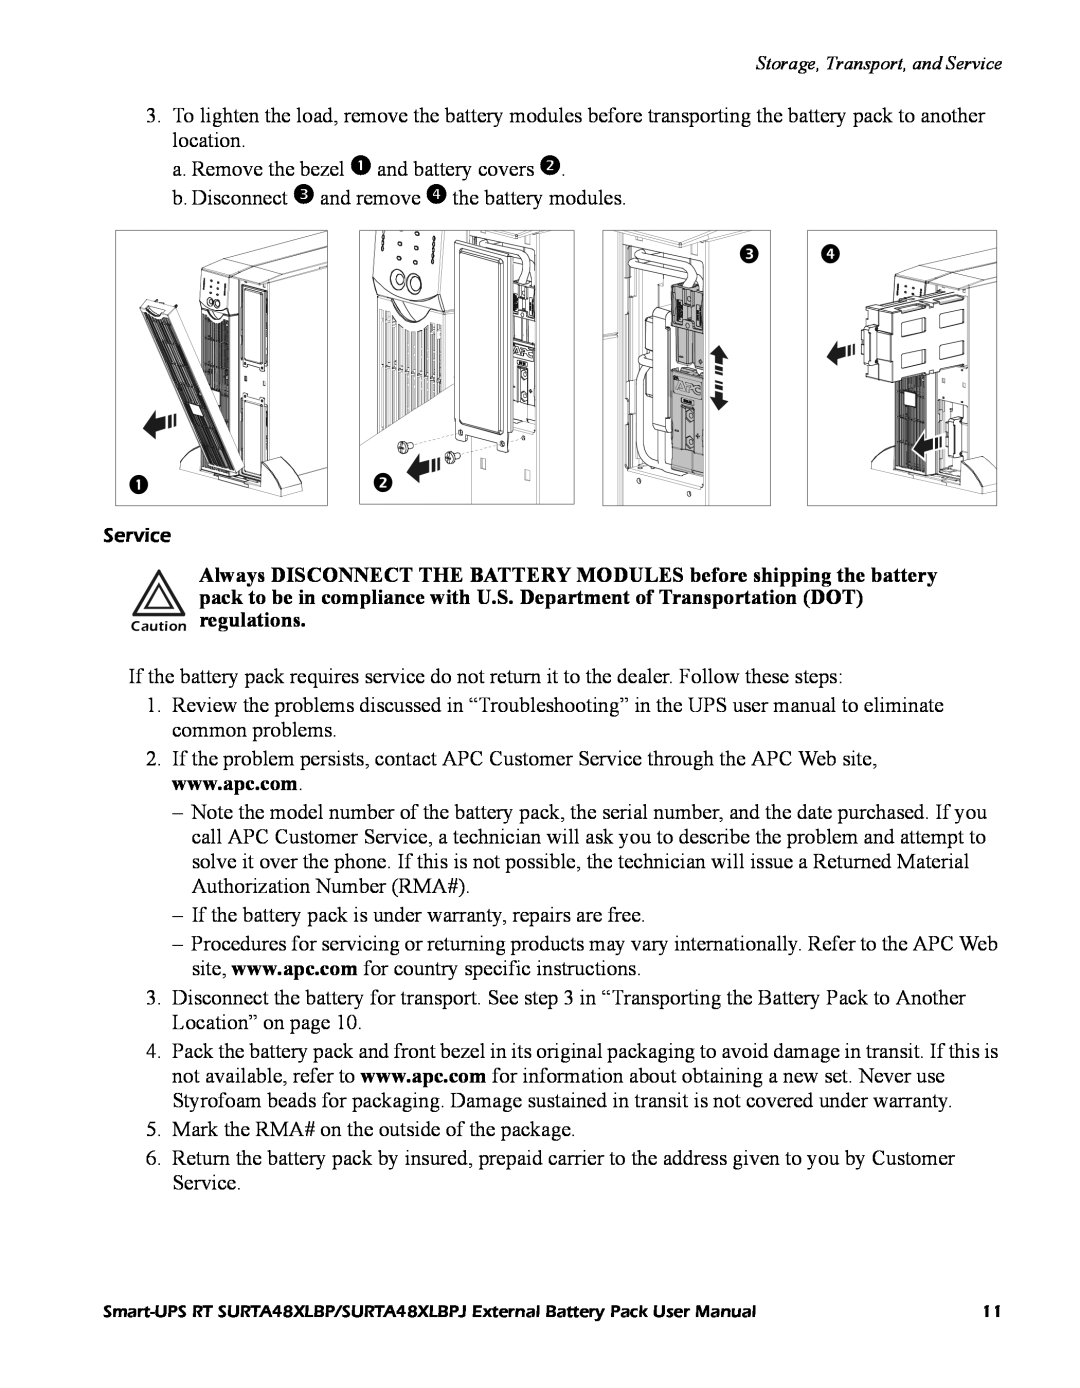 APC URTA48XLBPJ, RT SURTA48XLBP user manual Caution regulations 